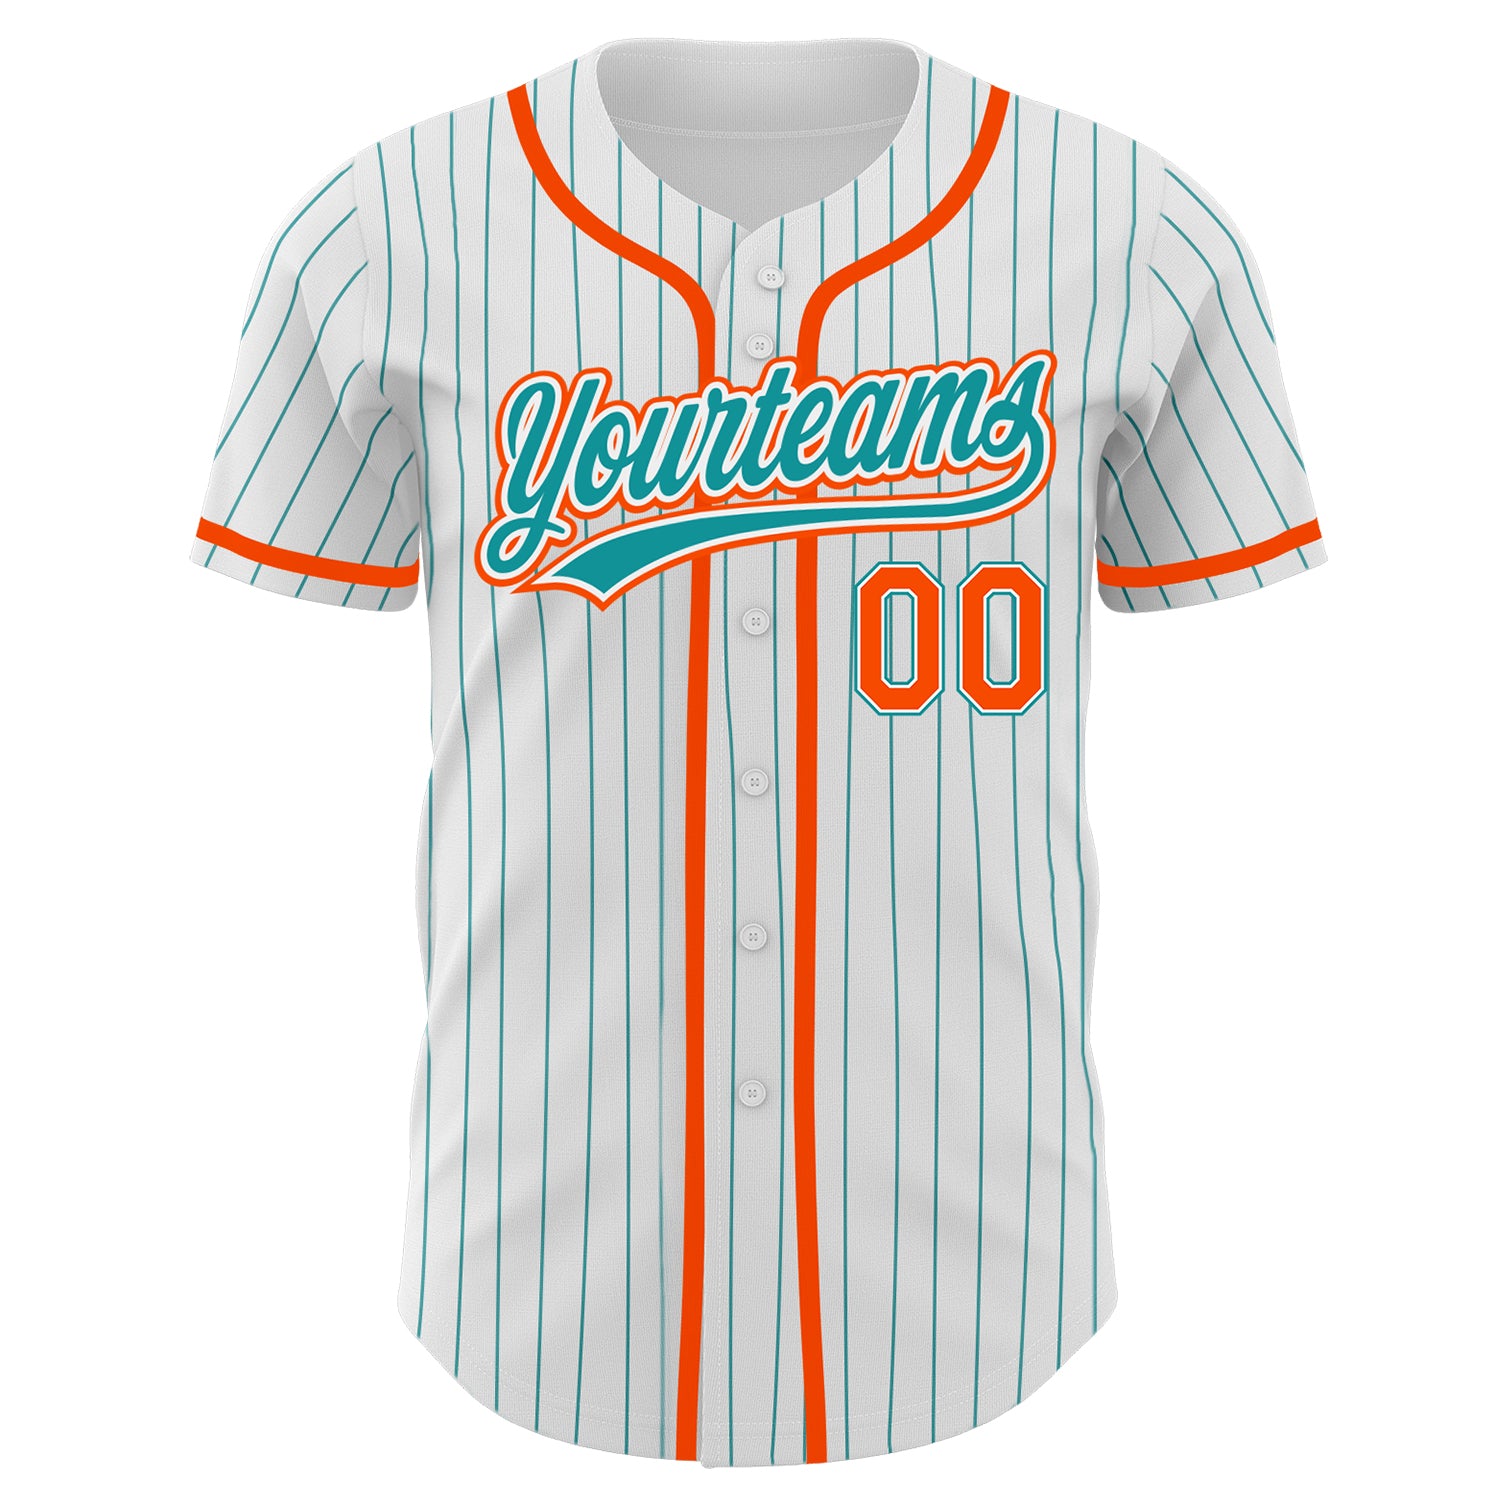 Custom-White-Teal-Pinstripe-Teal-Orange-Baseball-MLB-Jersey-5525